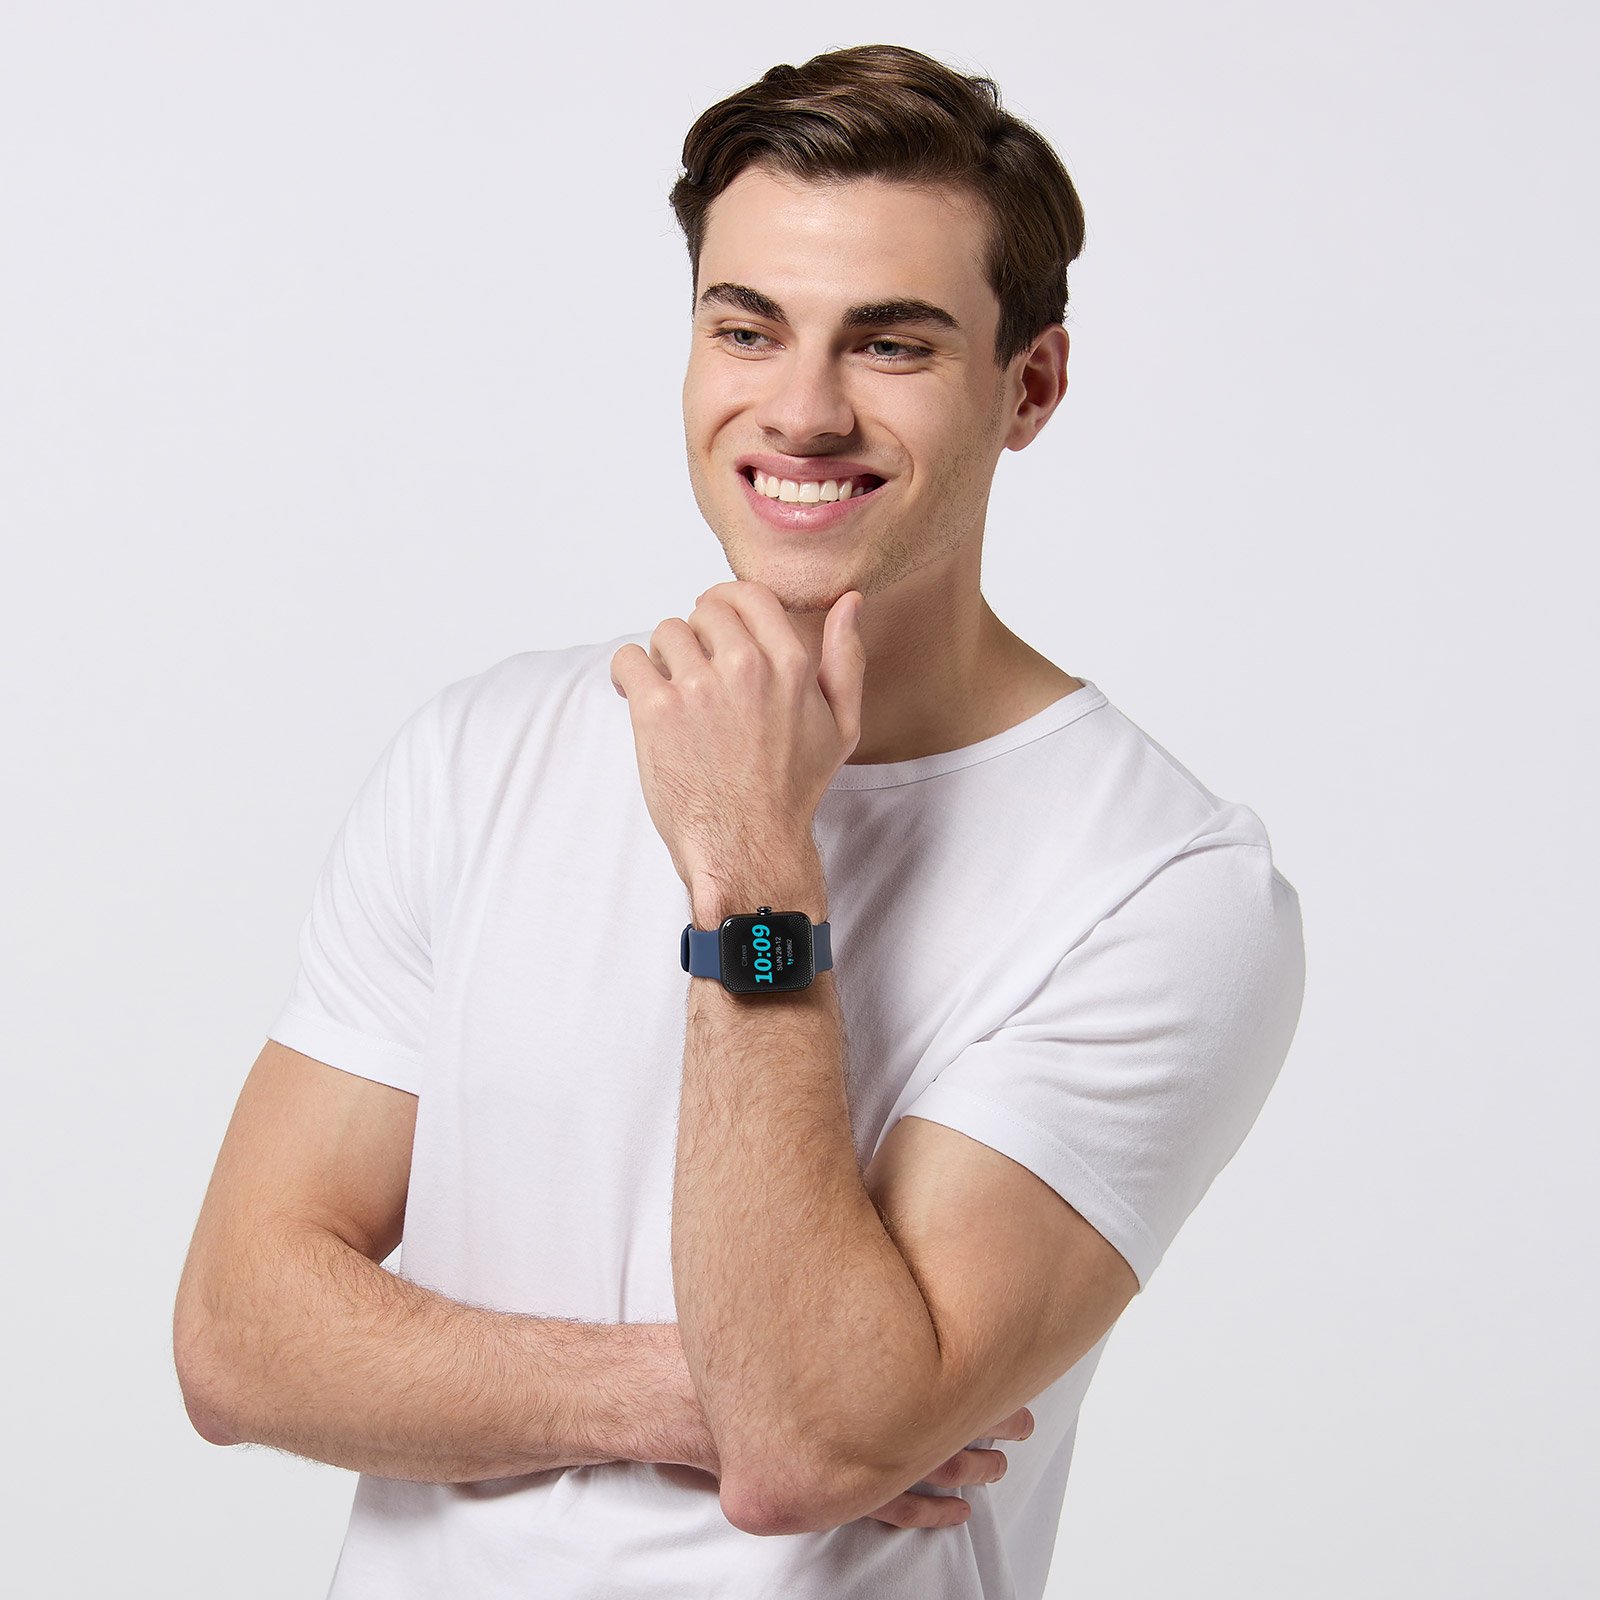 Citrea Smart Watch - gummi, blå, 1,5 tum